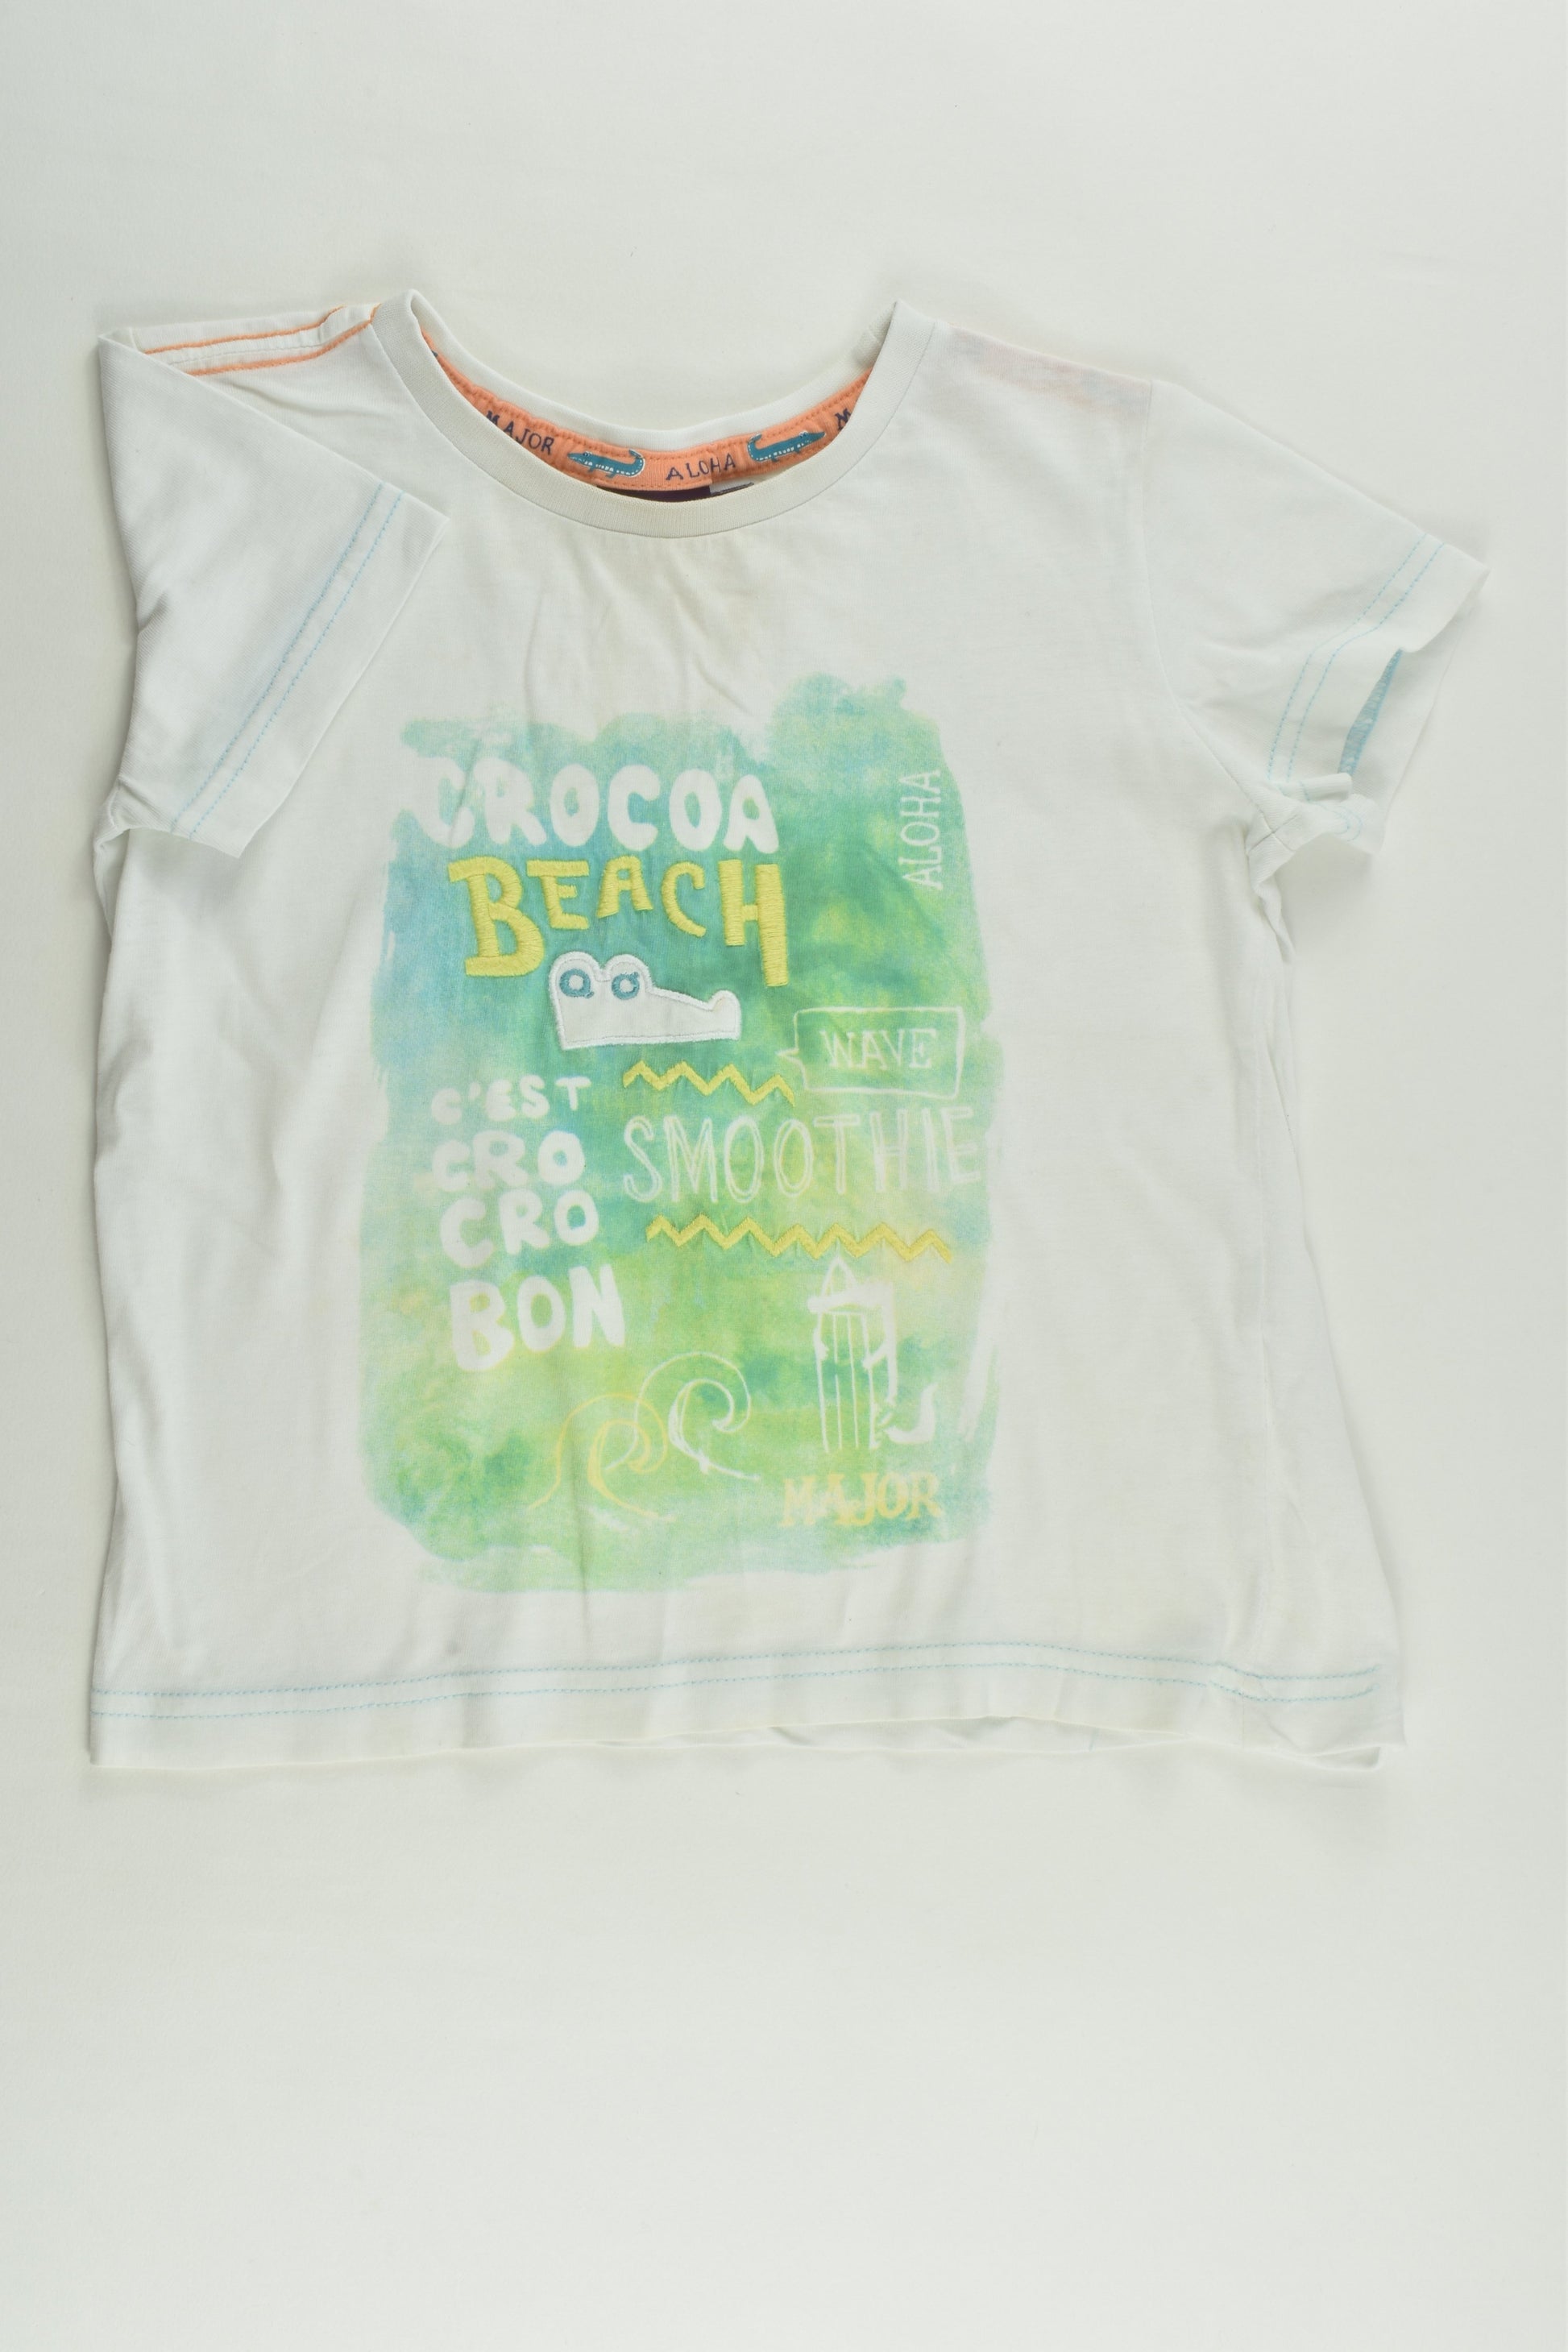 Sergent Major Size 4 (104 cm) 'Crocoa Beach' T-shirt